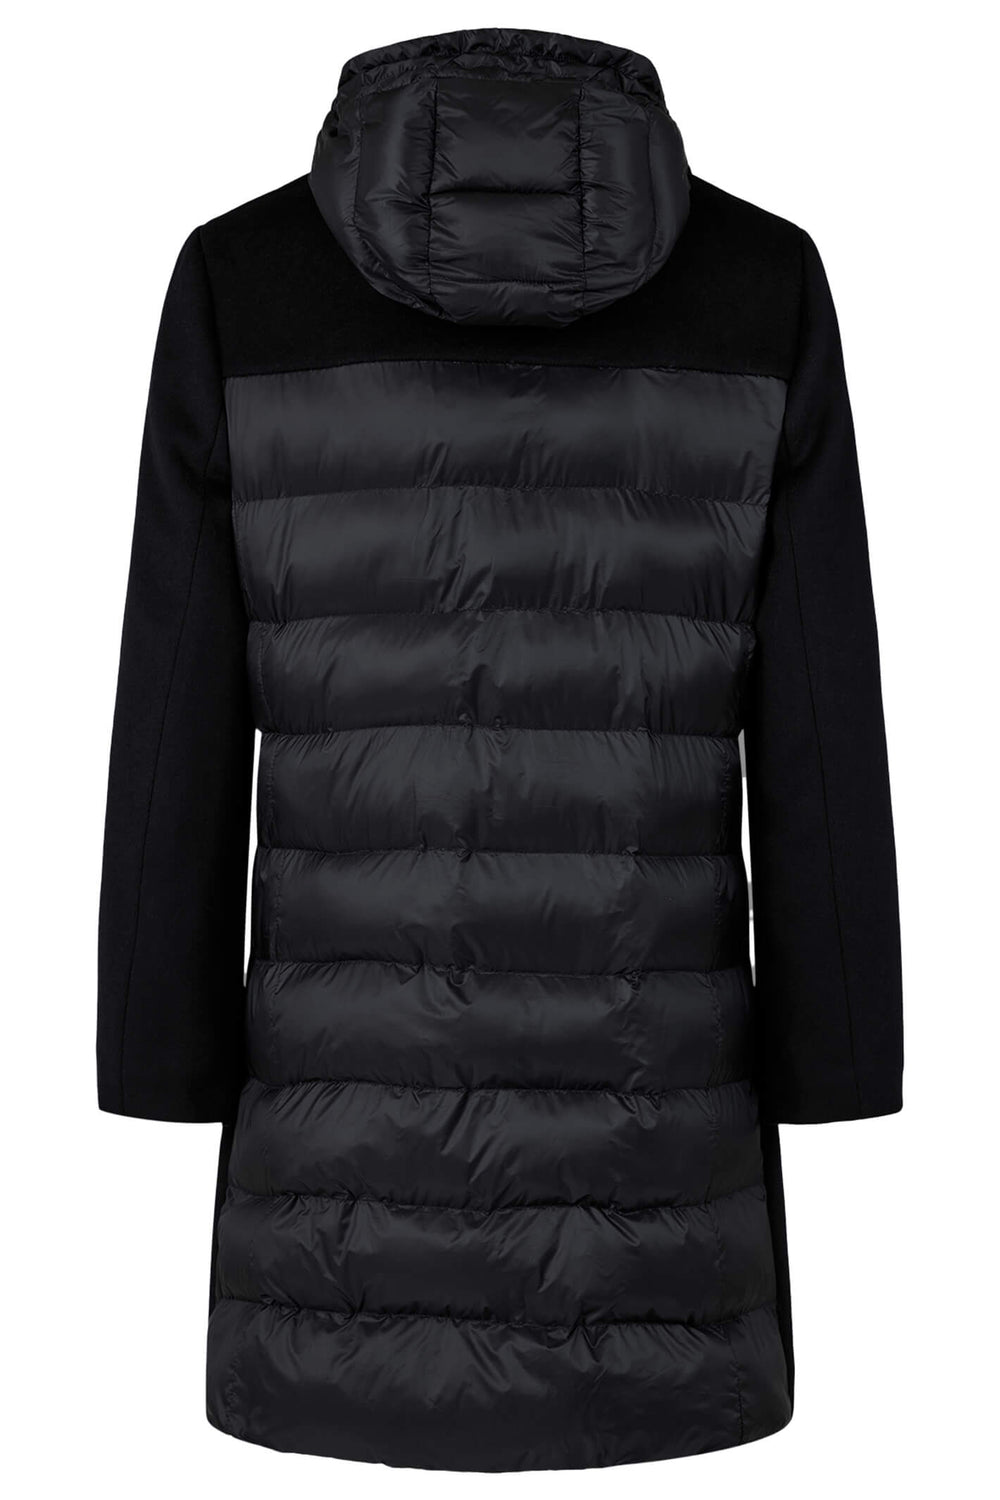 Normann 7723-55-90 Black Padded Back Coat - Olivia Grace Fashion